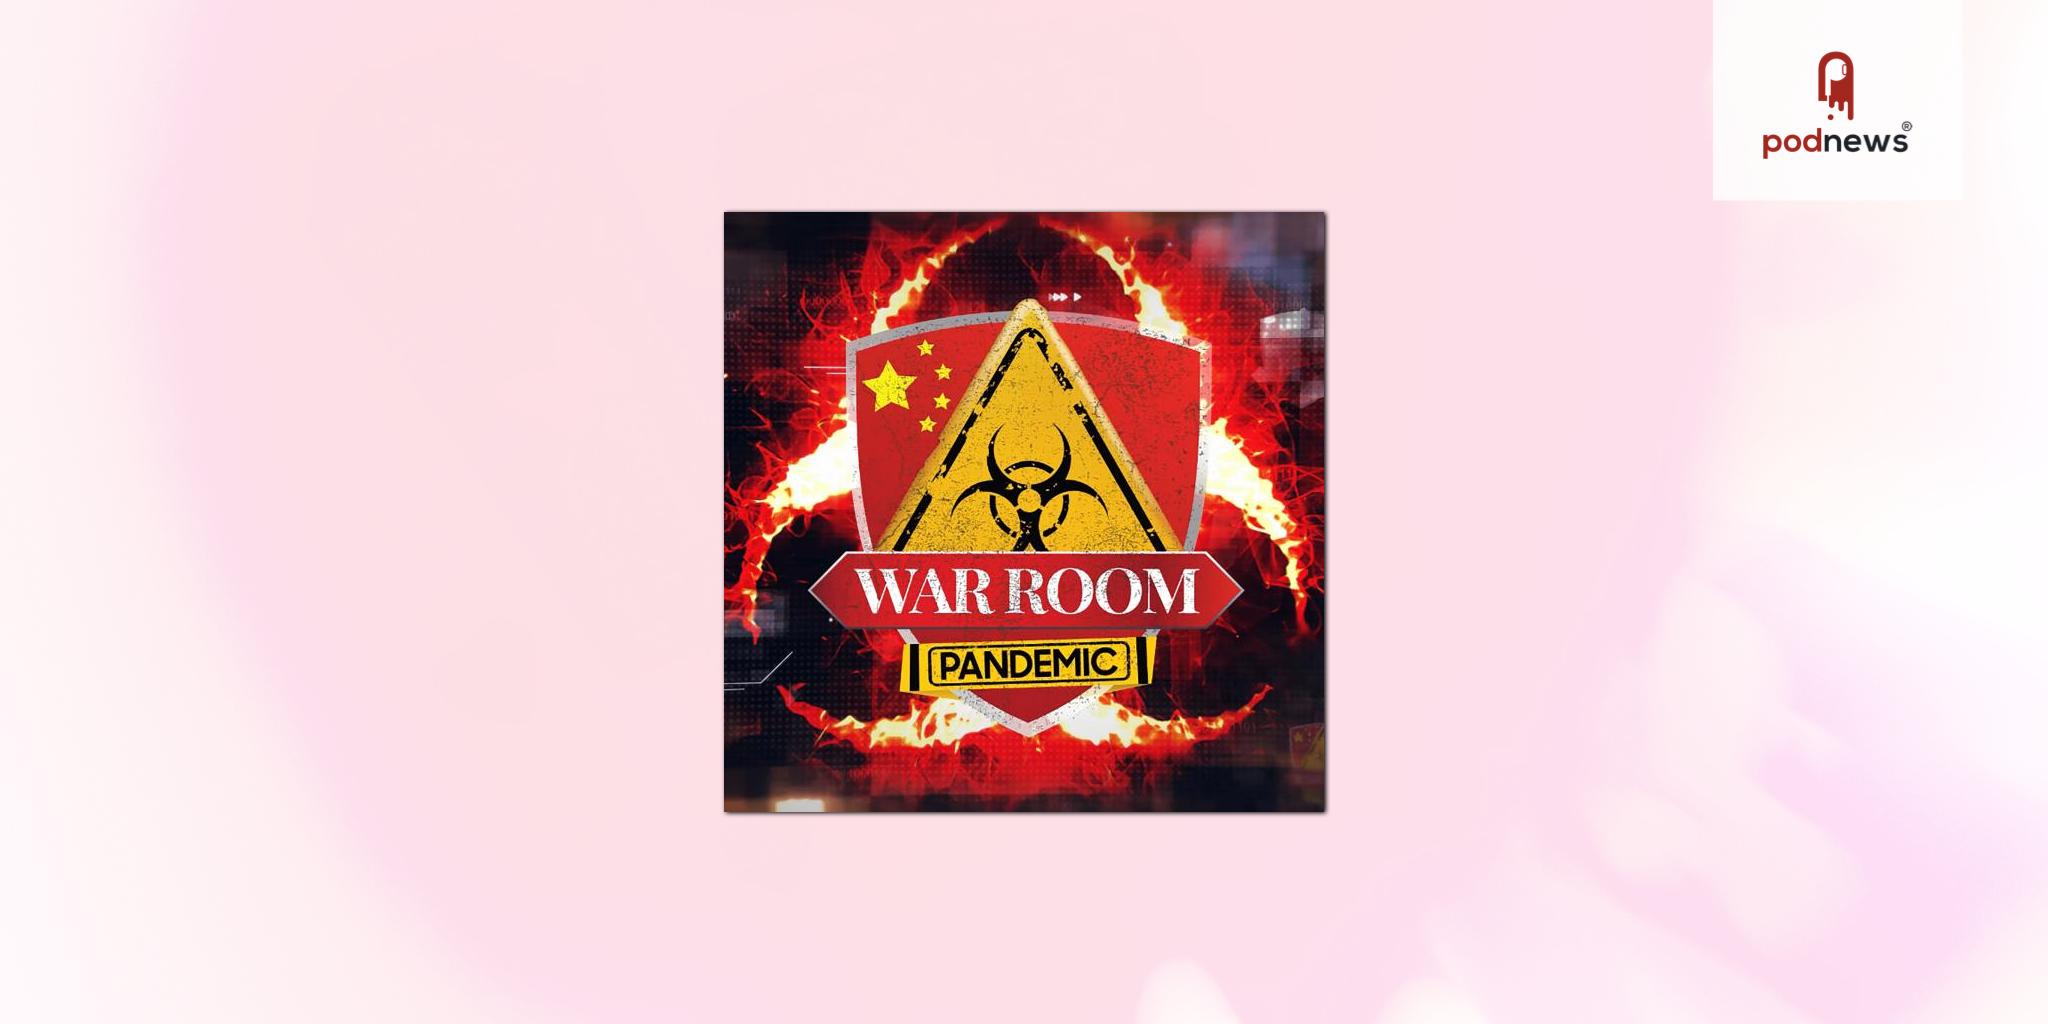 warroom pandemic podcast